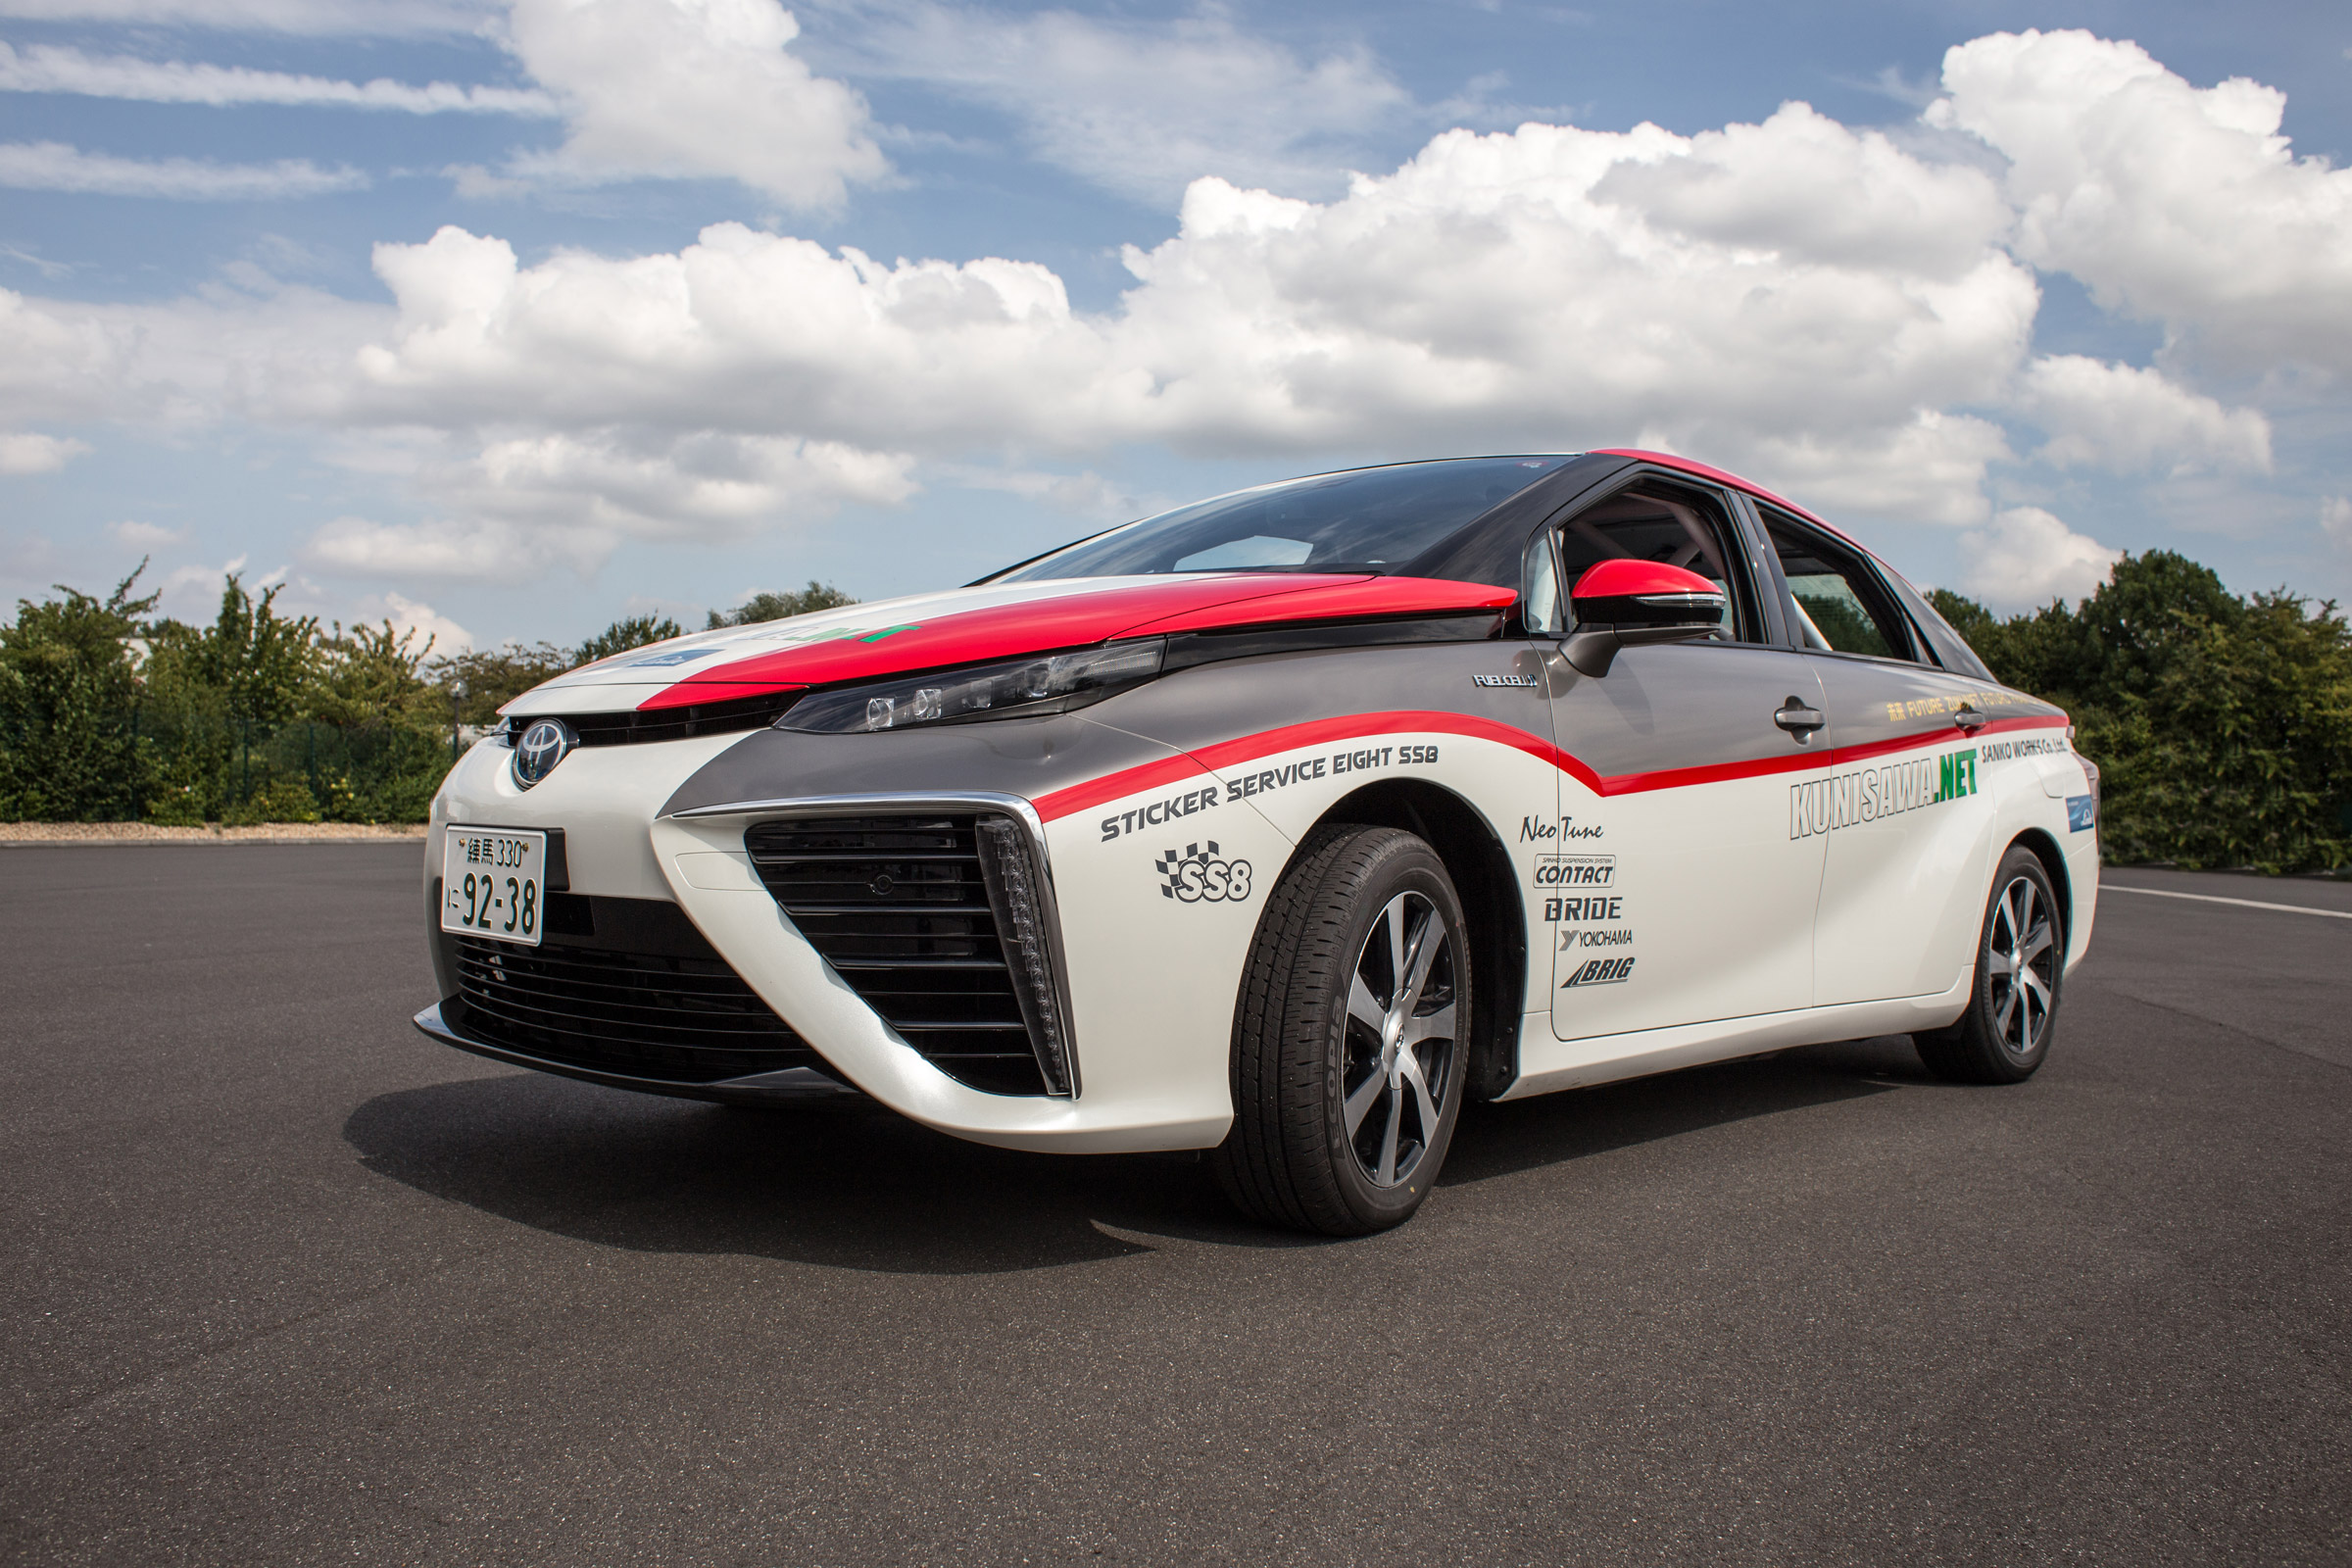 Toyota Mirai hydrogen car goes rallying | Auto Express